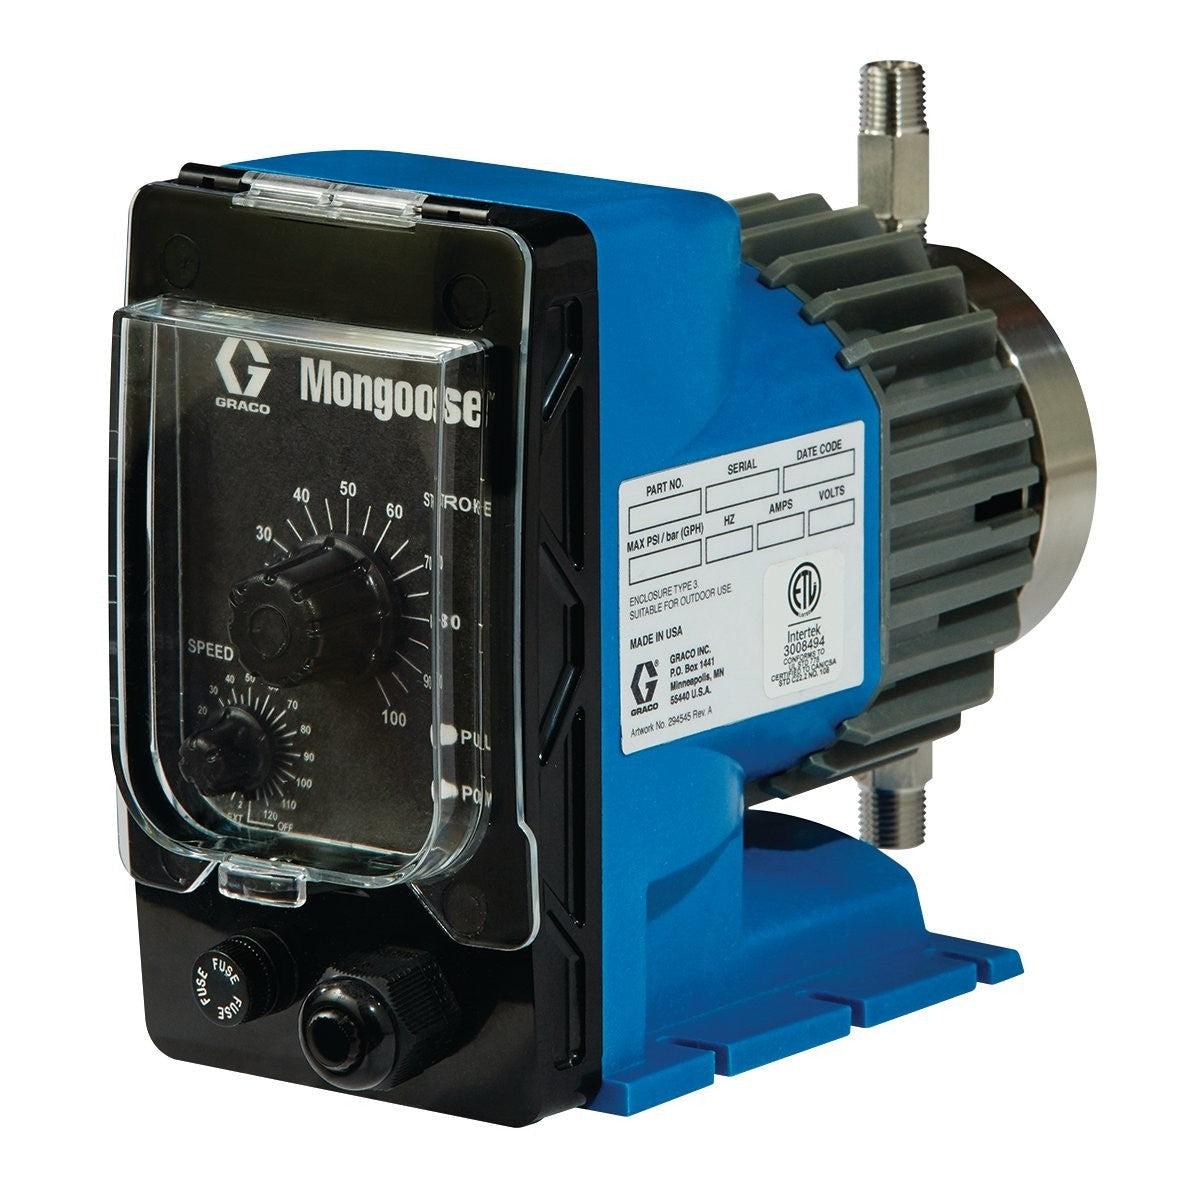 Mongooseª PVDF Metering Pump, 120 VAC, 30 GDP, 110 PSI